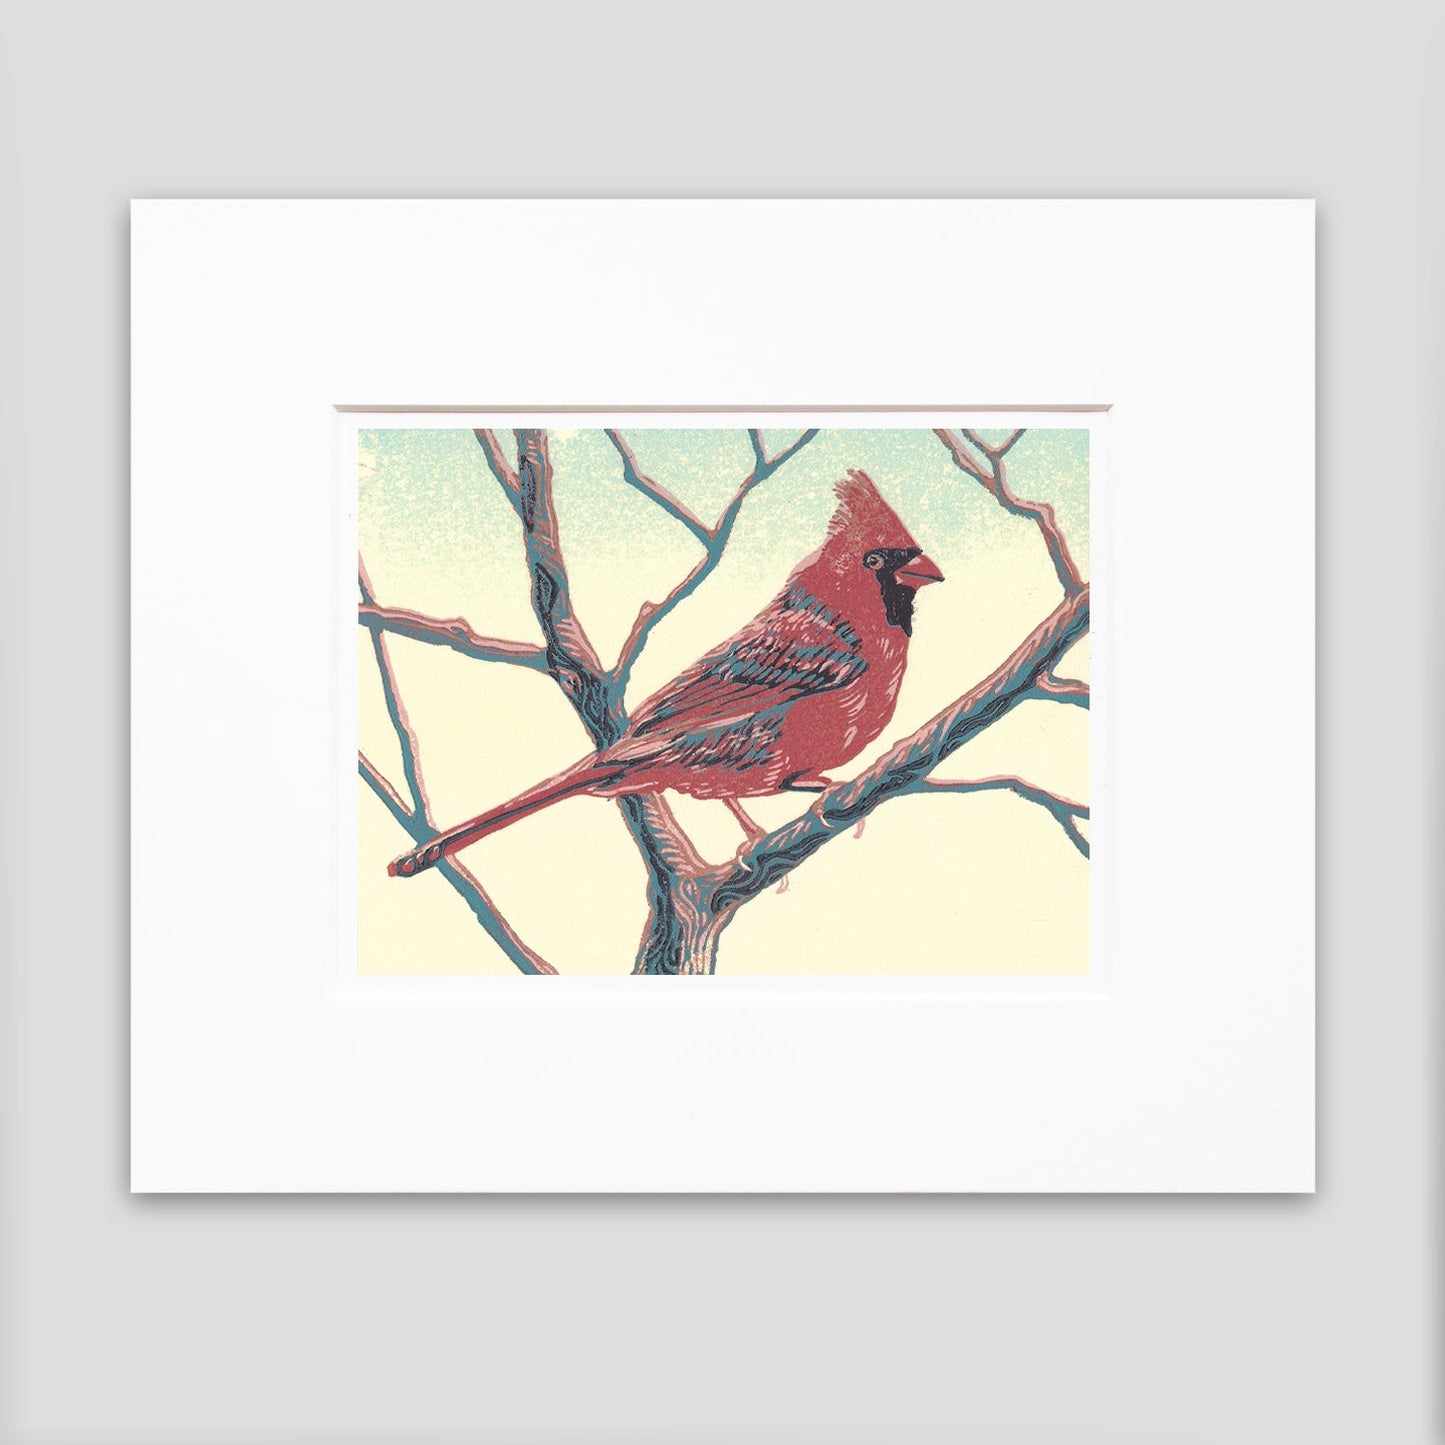 Contemporary bird art by printmaker Natalia Wohletz of Peninsula Prints titled Cardinal.